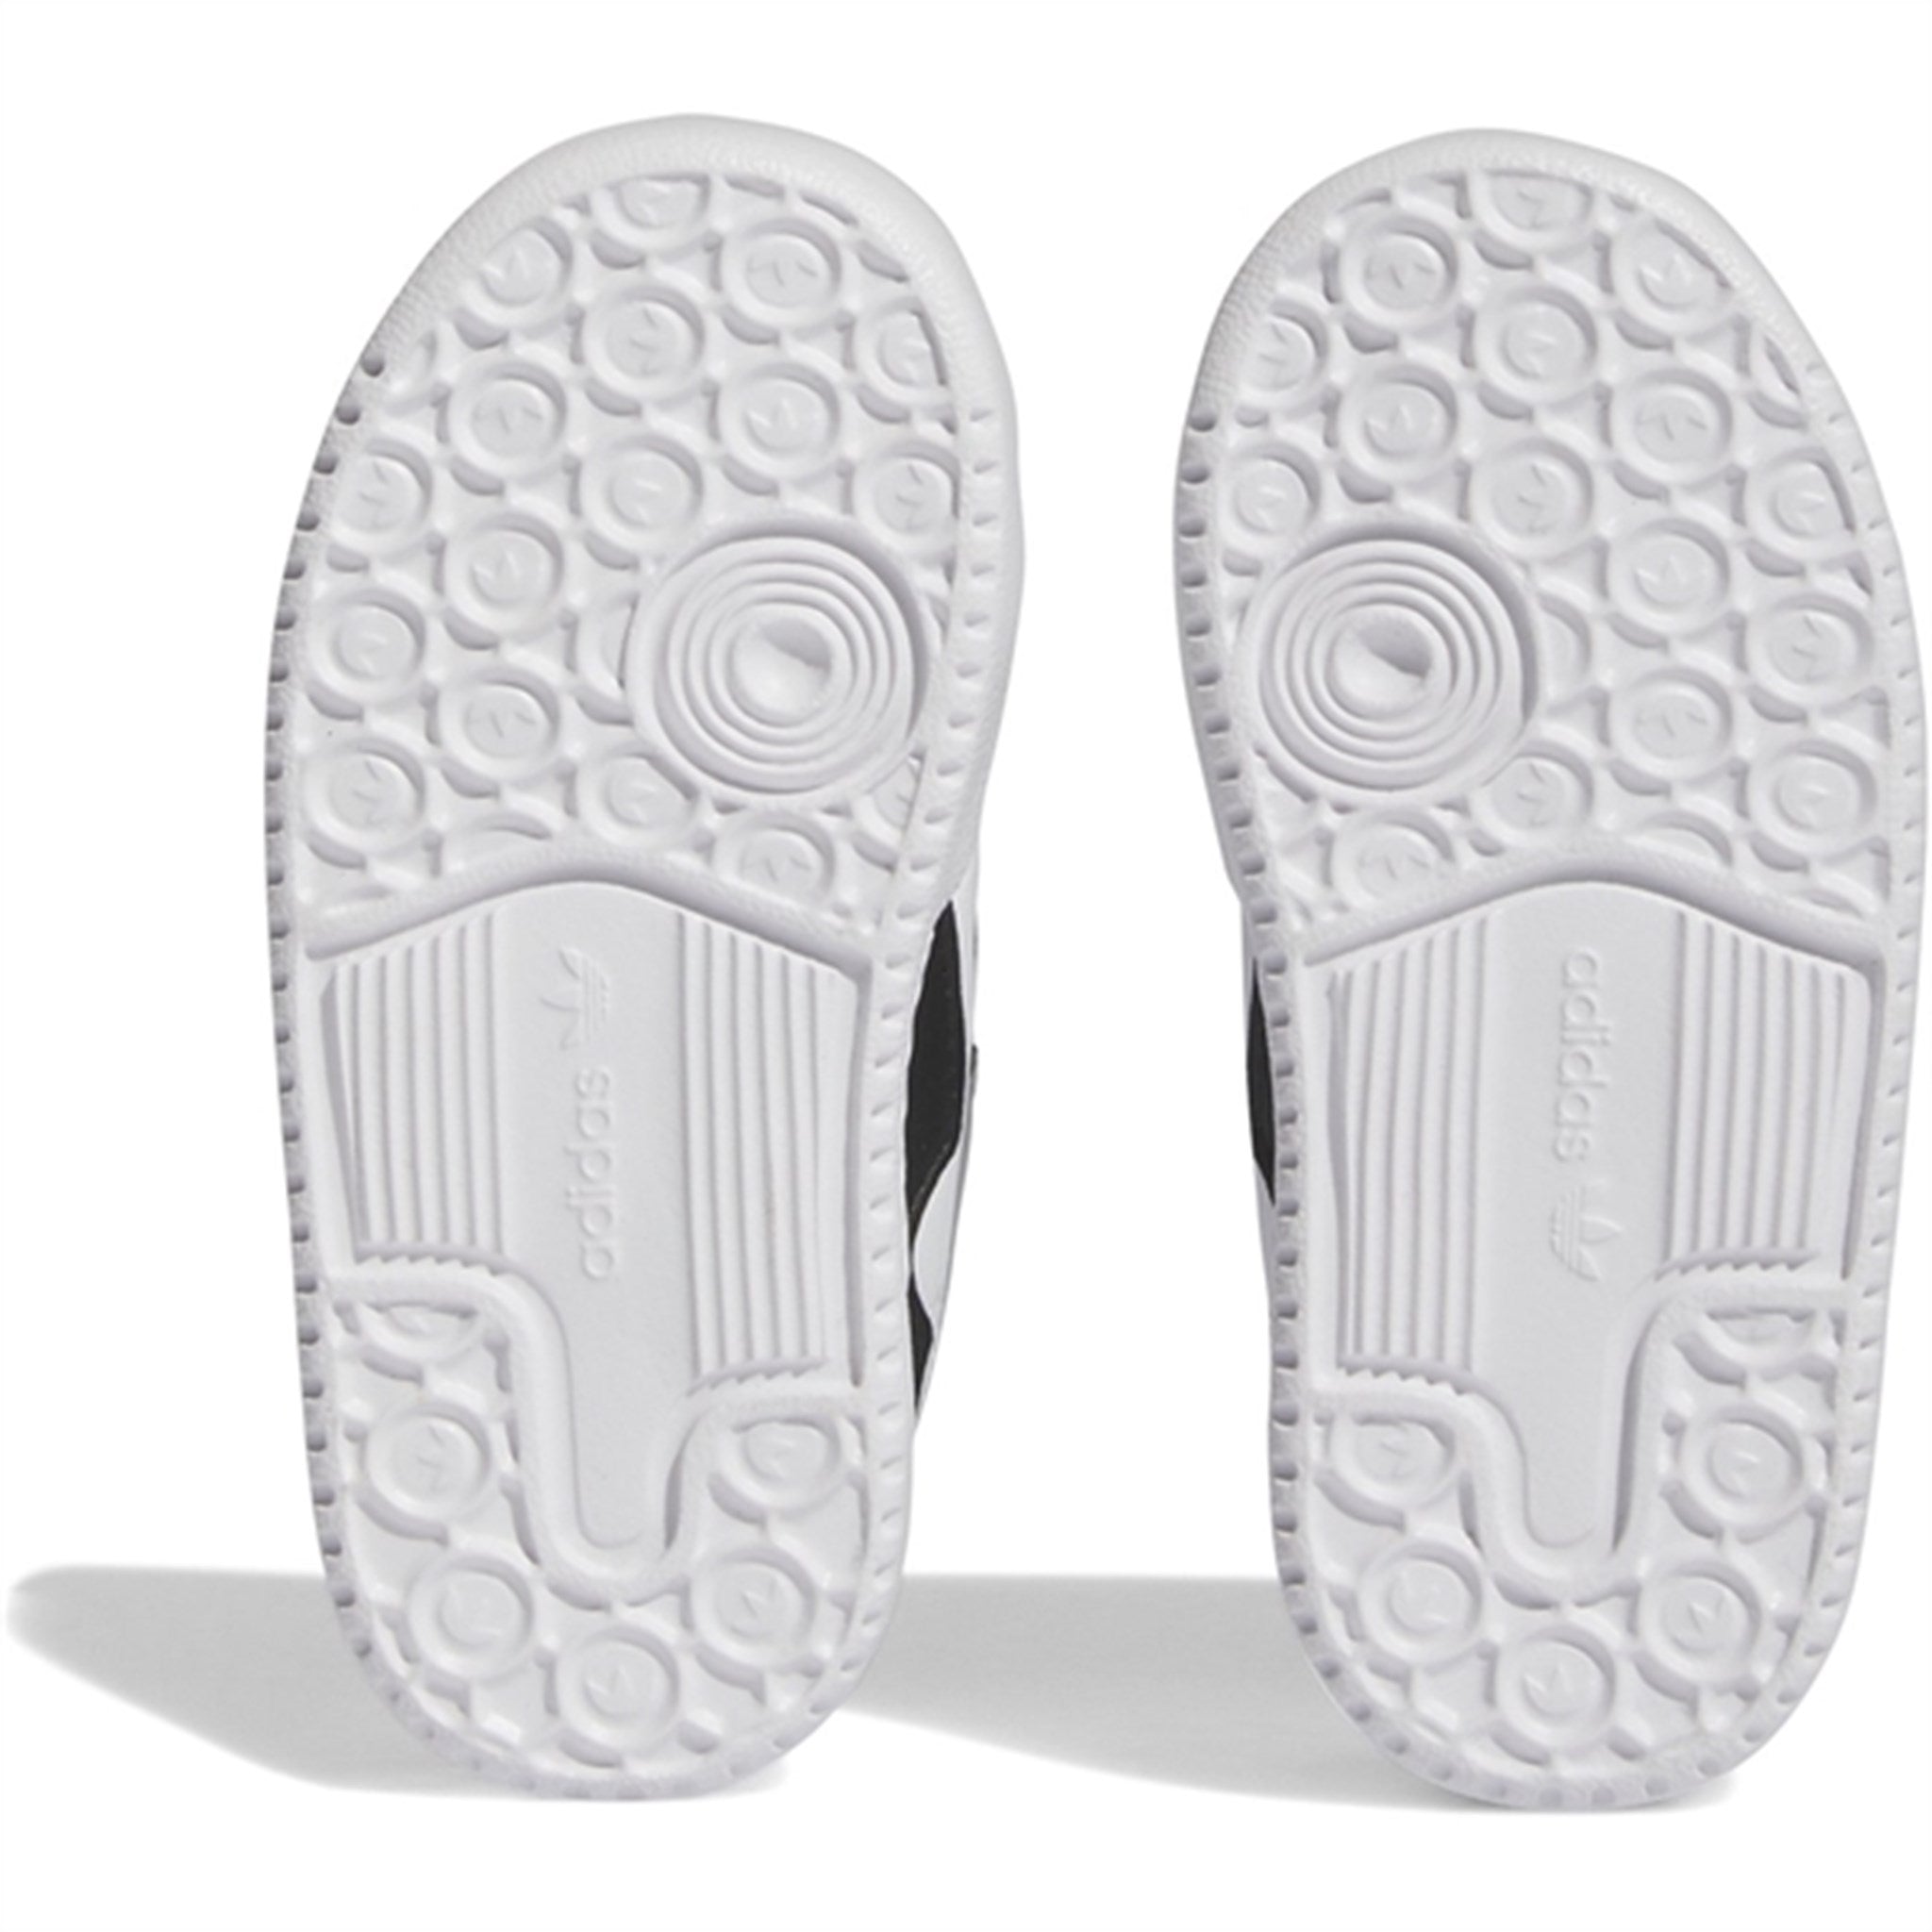 adidas Originals Forum Low 婴儿款黑/白色运动鞋 3